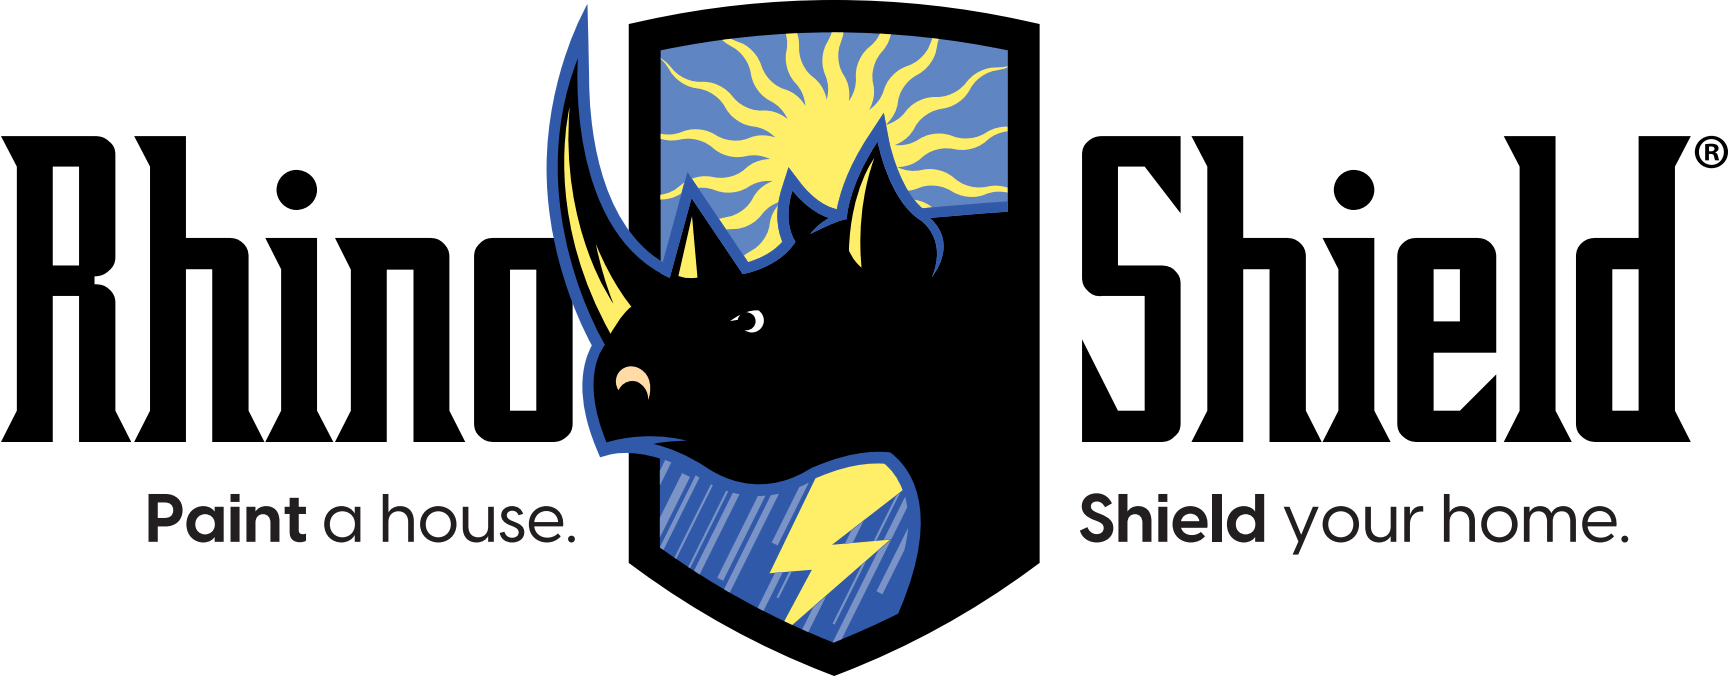 Rhino Shield of Pittsburgh Business logo